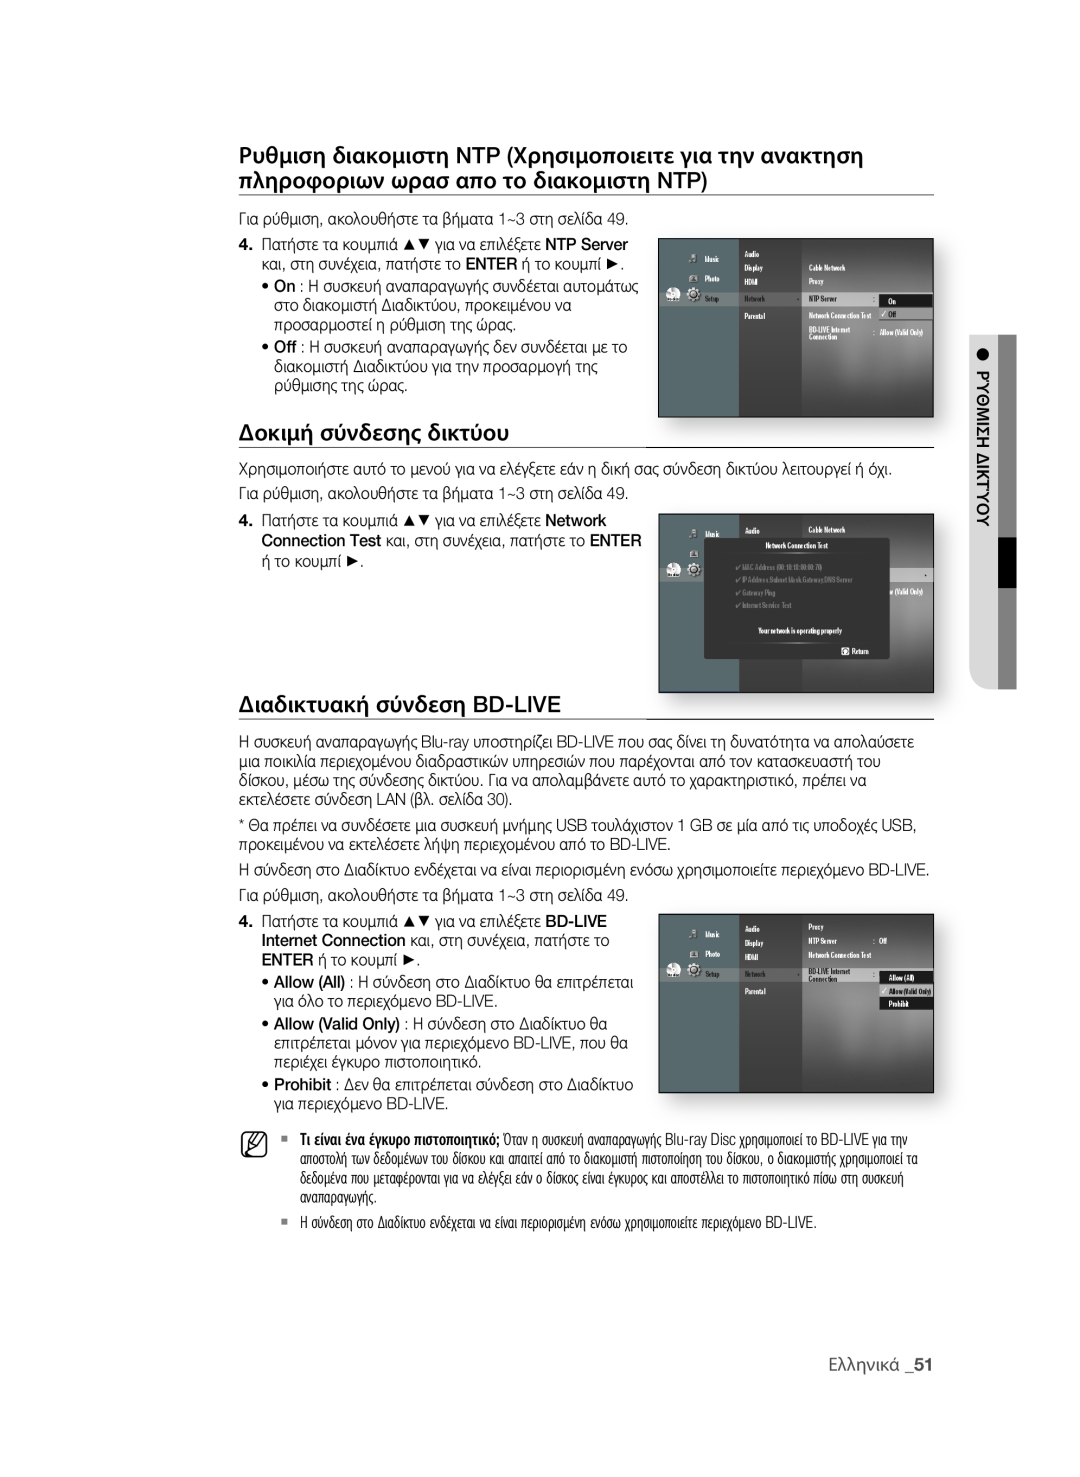 Samsung BD-P1580/EDC manual δοκιμή σύνδεσης δικτύου, διαδικτυακή σύνδεση BD-LIVE, στο διακομιστή Διαδικτύου, προκειμένου να 